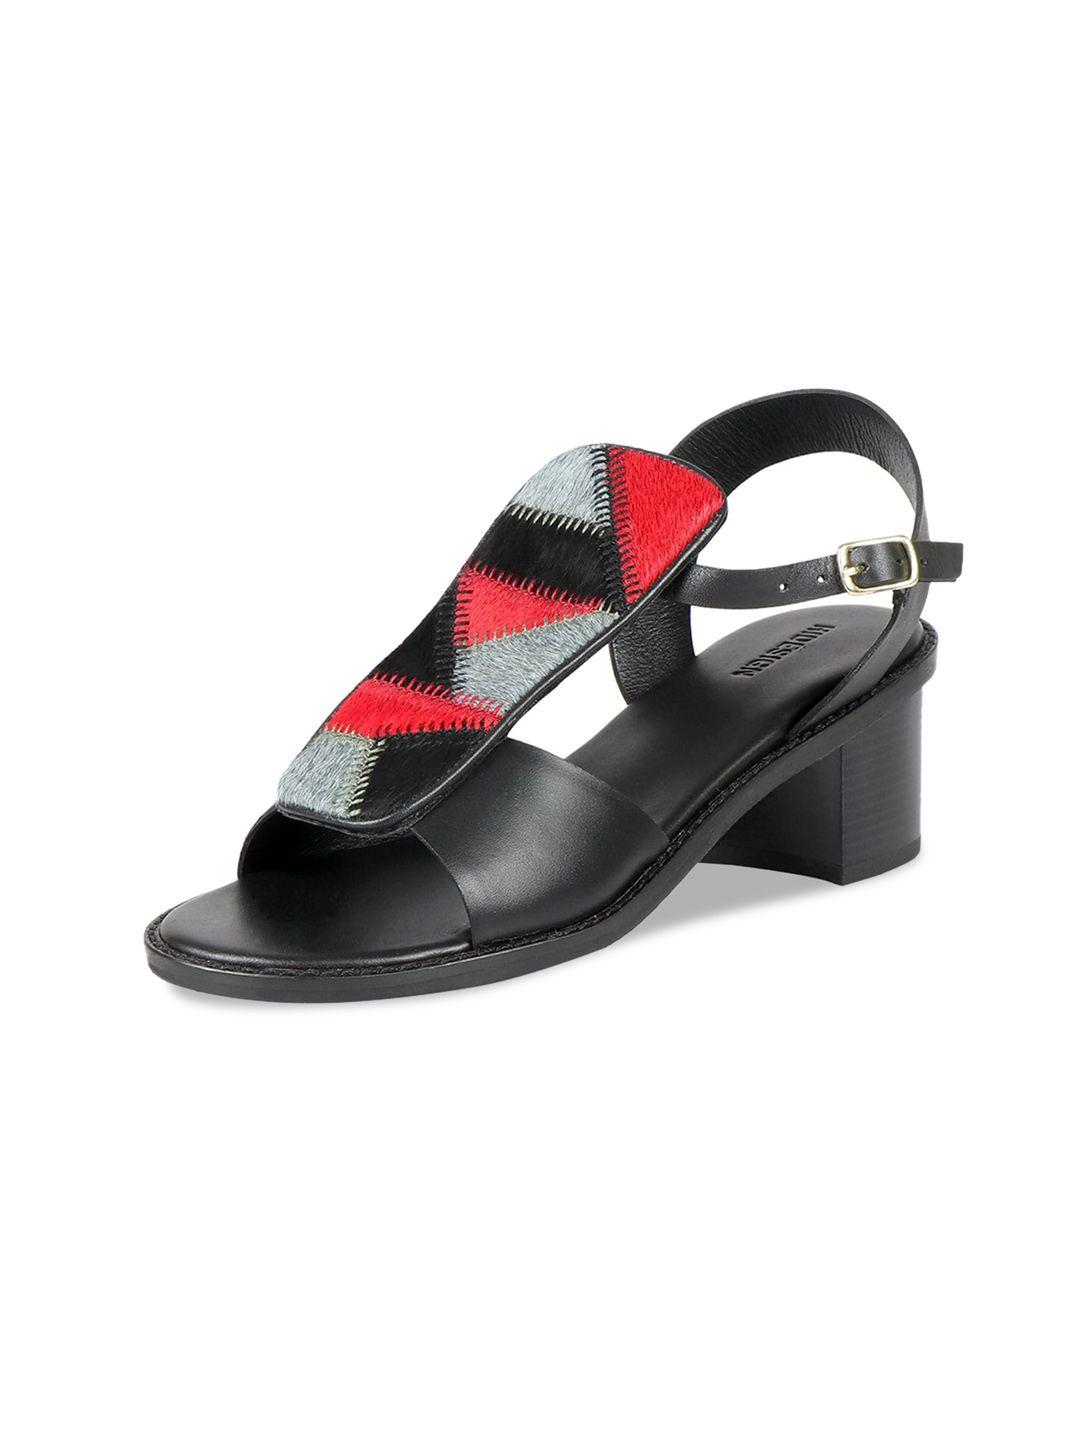 hidesign joni colourblocked leather block heels